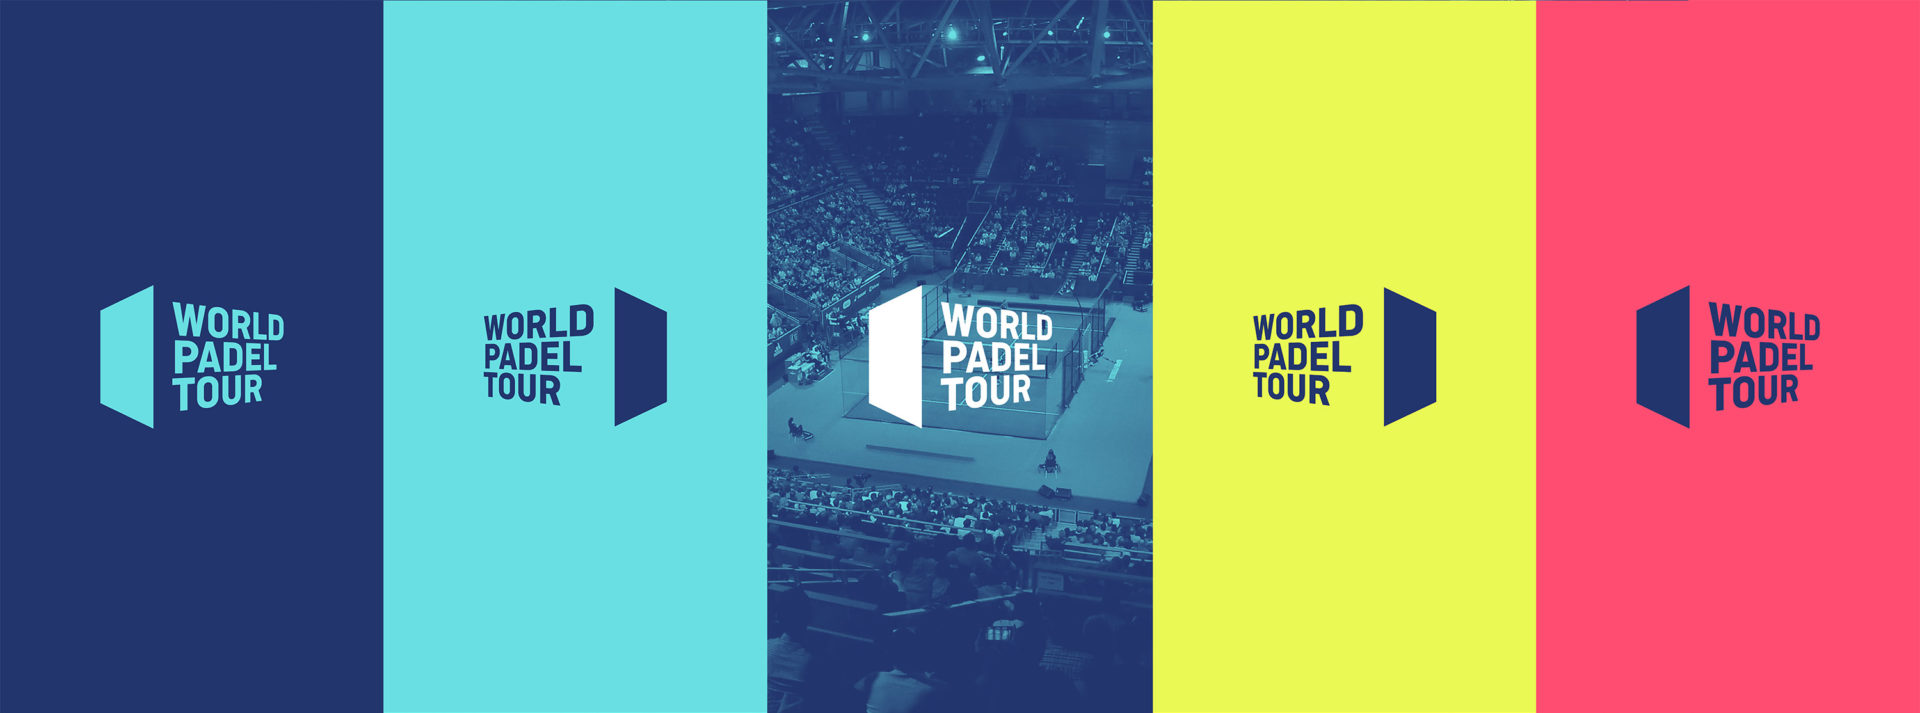 los-10-mejores-puntos-de-world-padel-tour-2021-padel-world